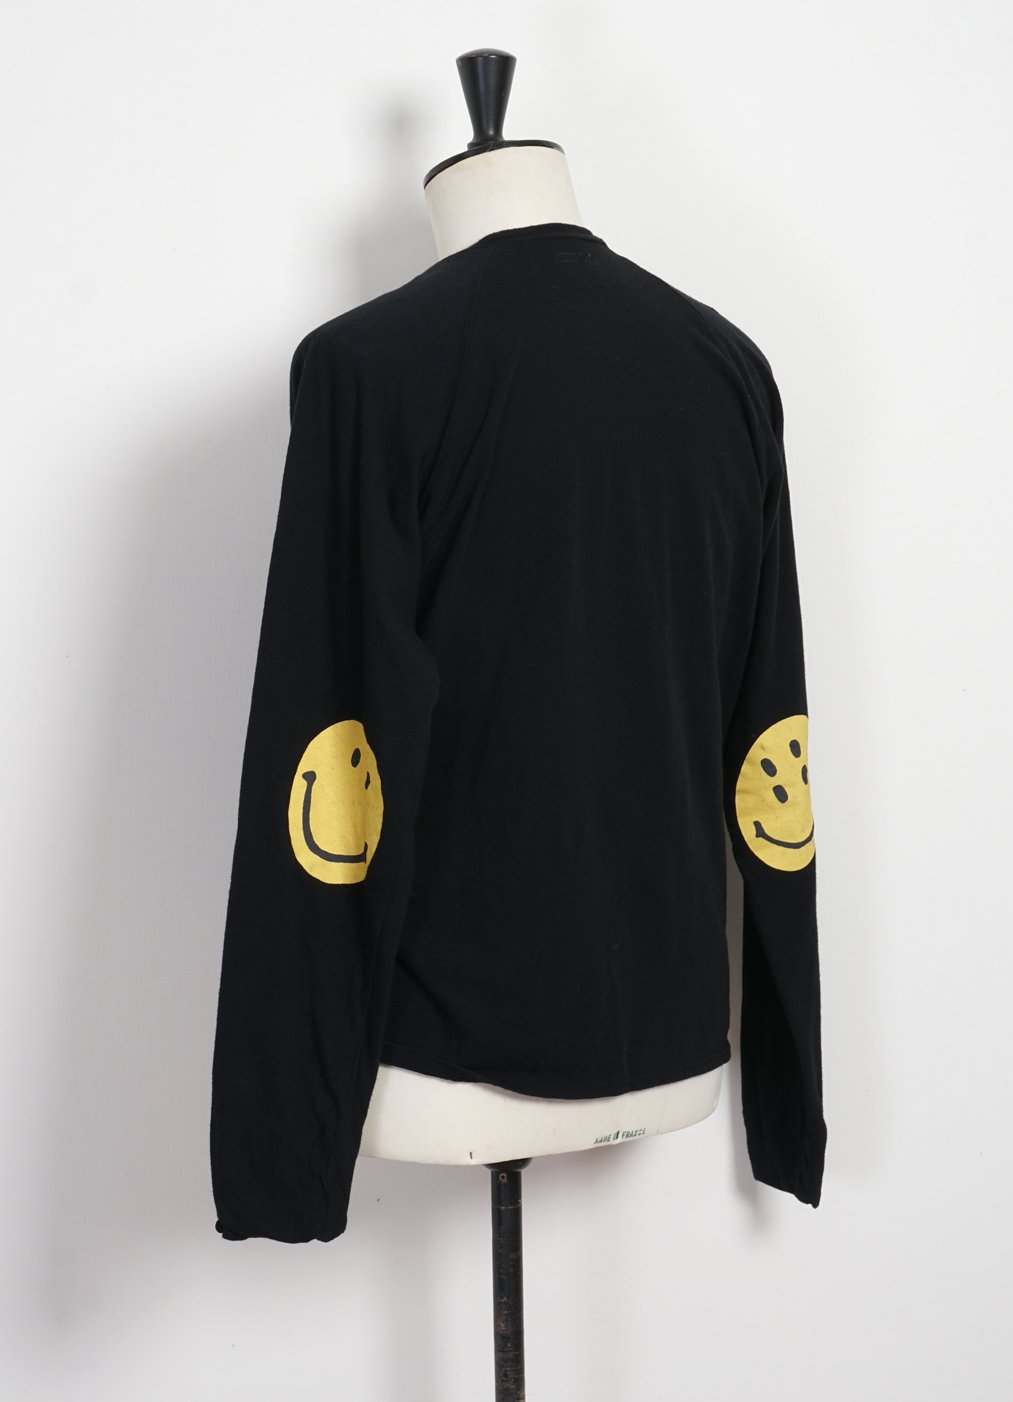 KAPITAL - CHEF SMILIE PATCH | Long Sleeve T | Black - HANSEN Garments